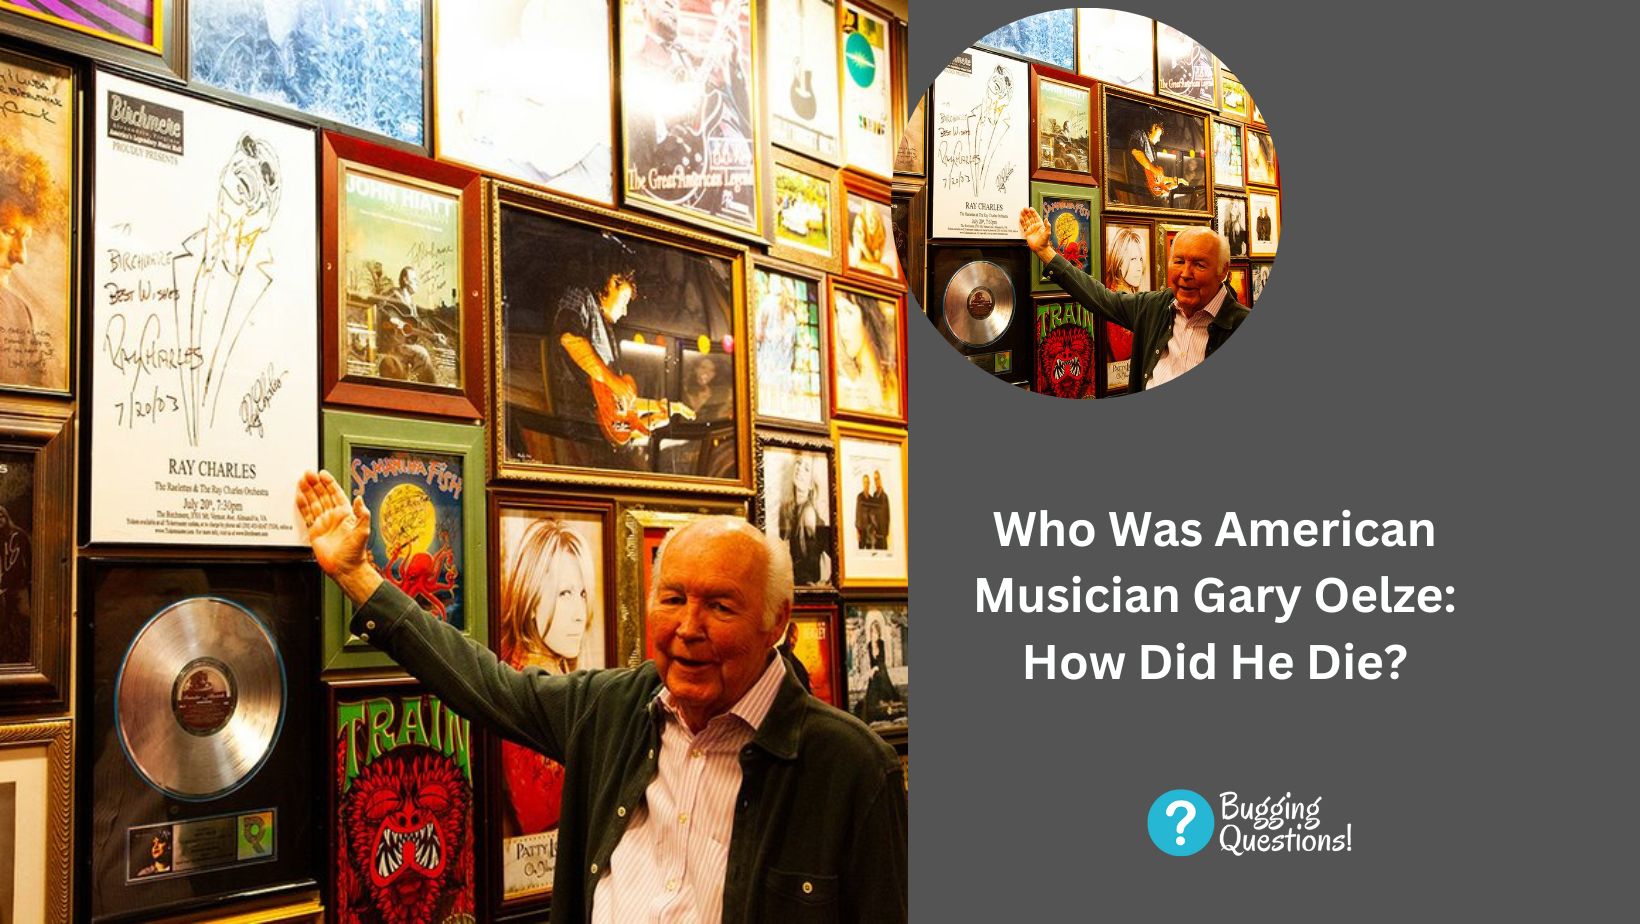 Who Was American Musician Gary Oelze: How Did He Die?